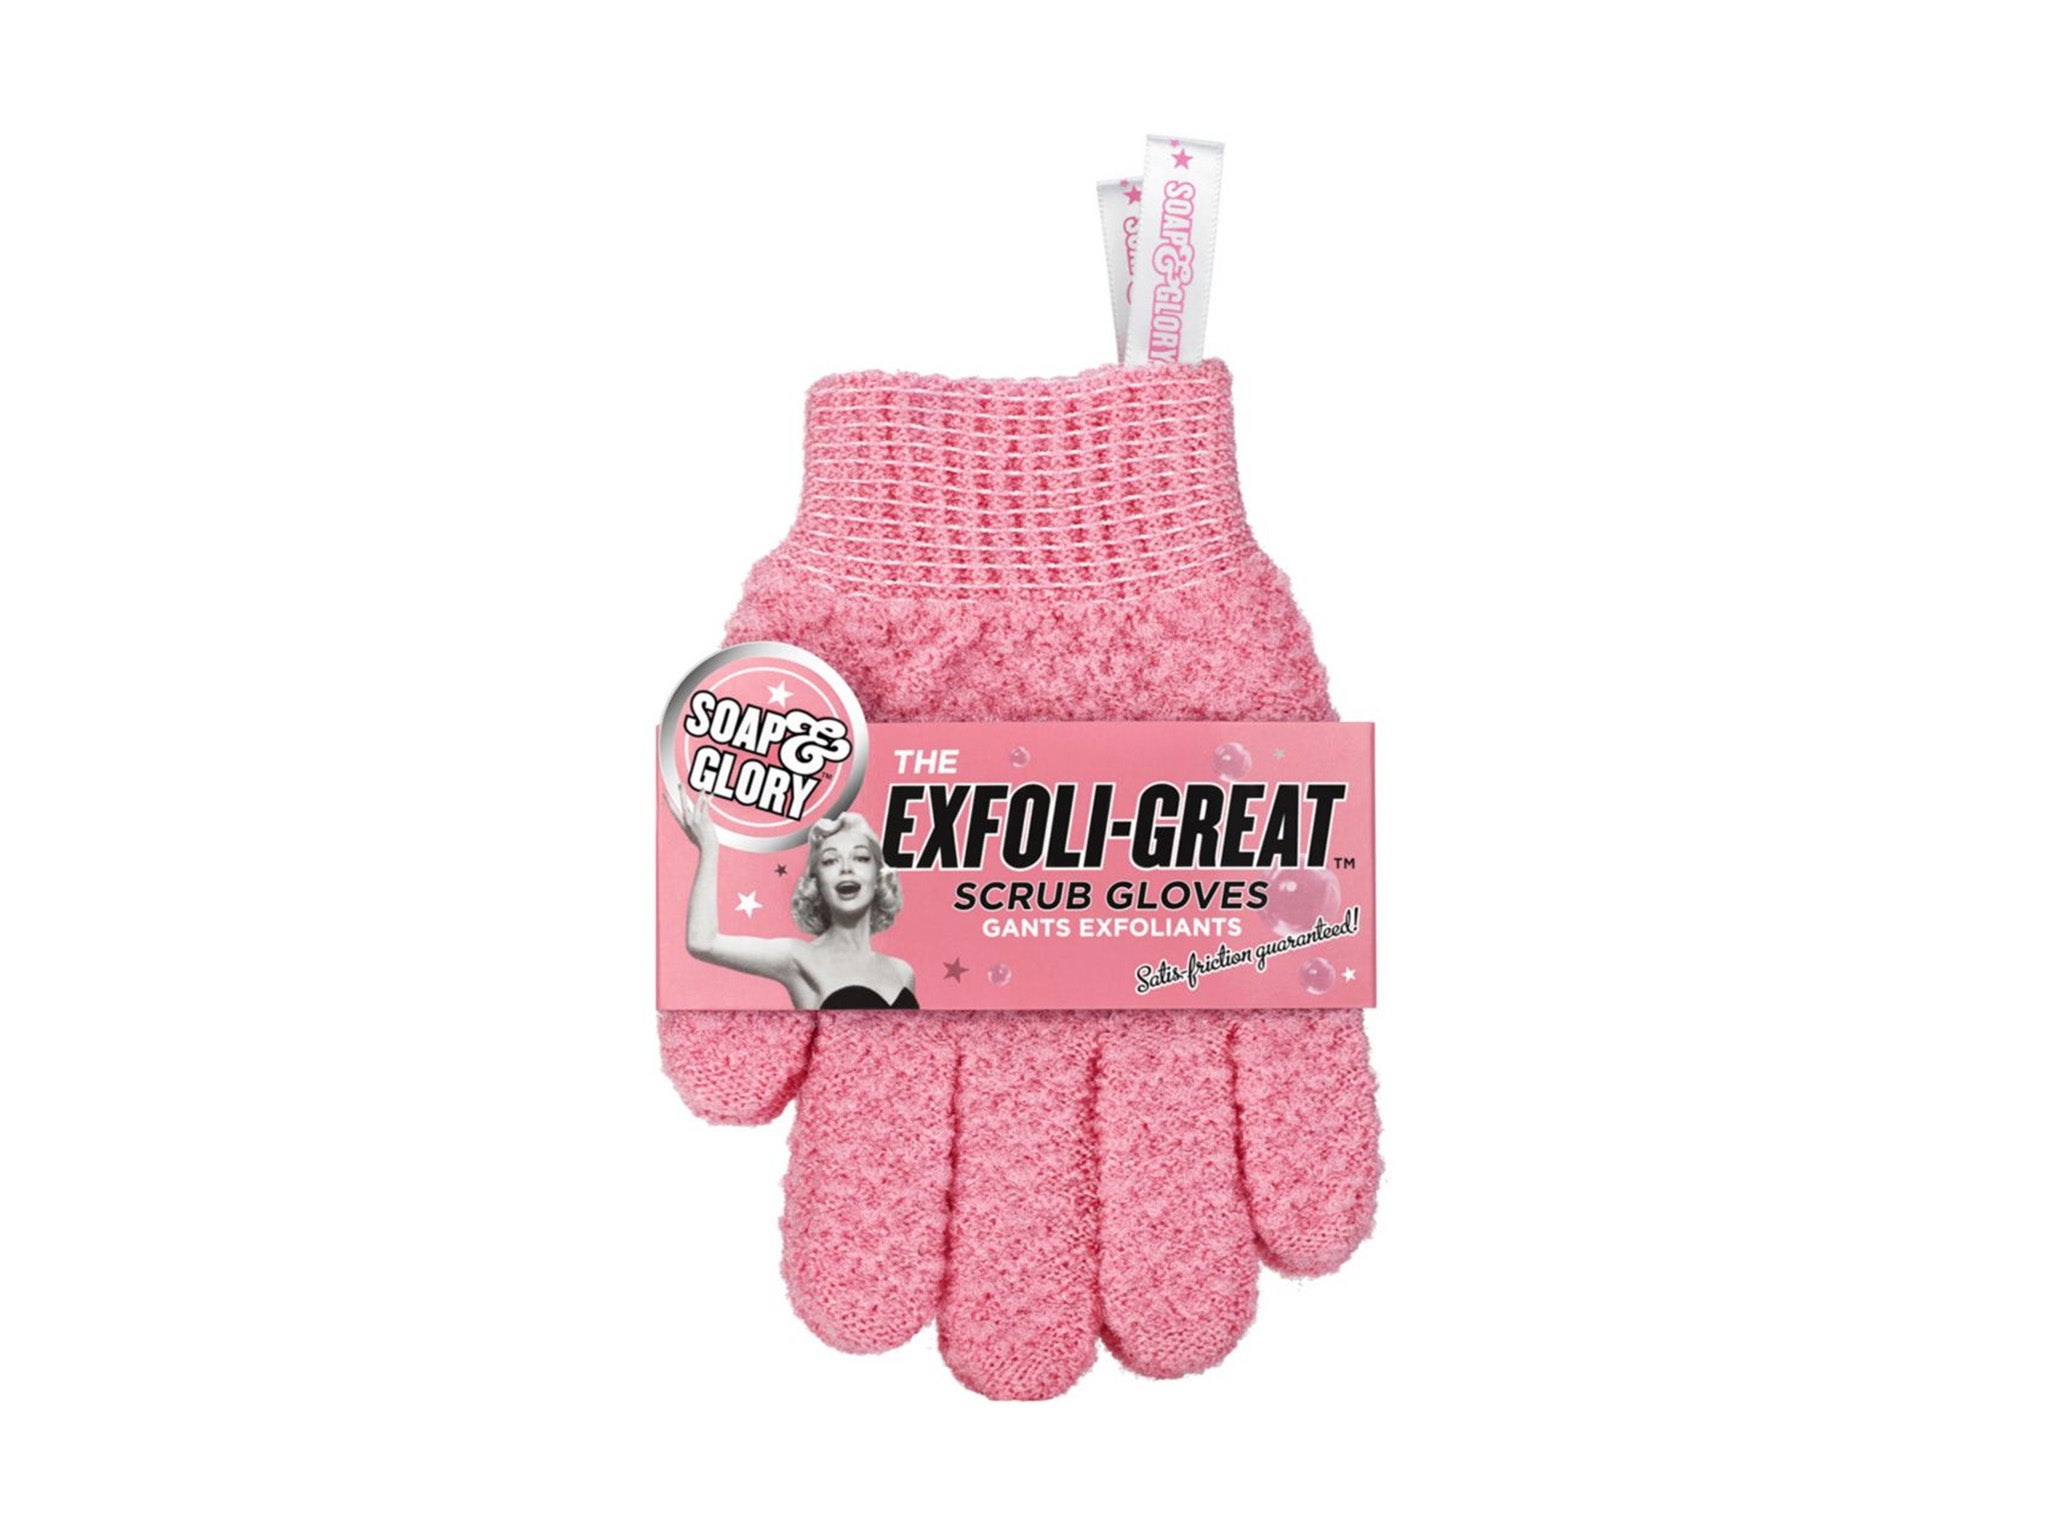 Soap & Glory exfoliating scrub gloves